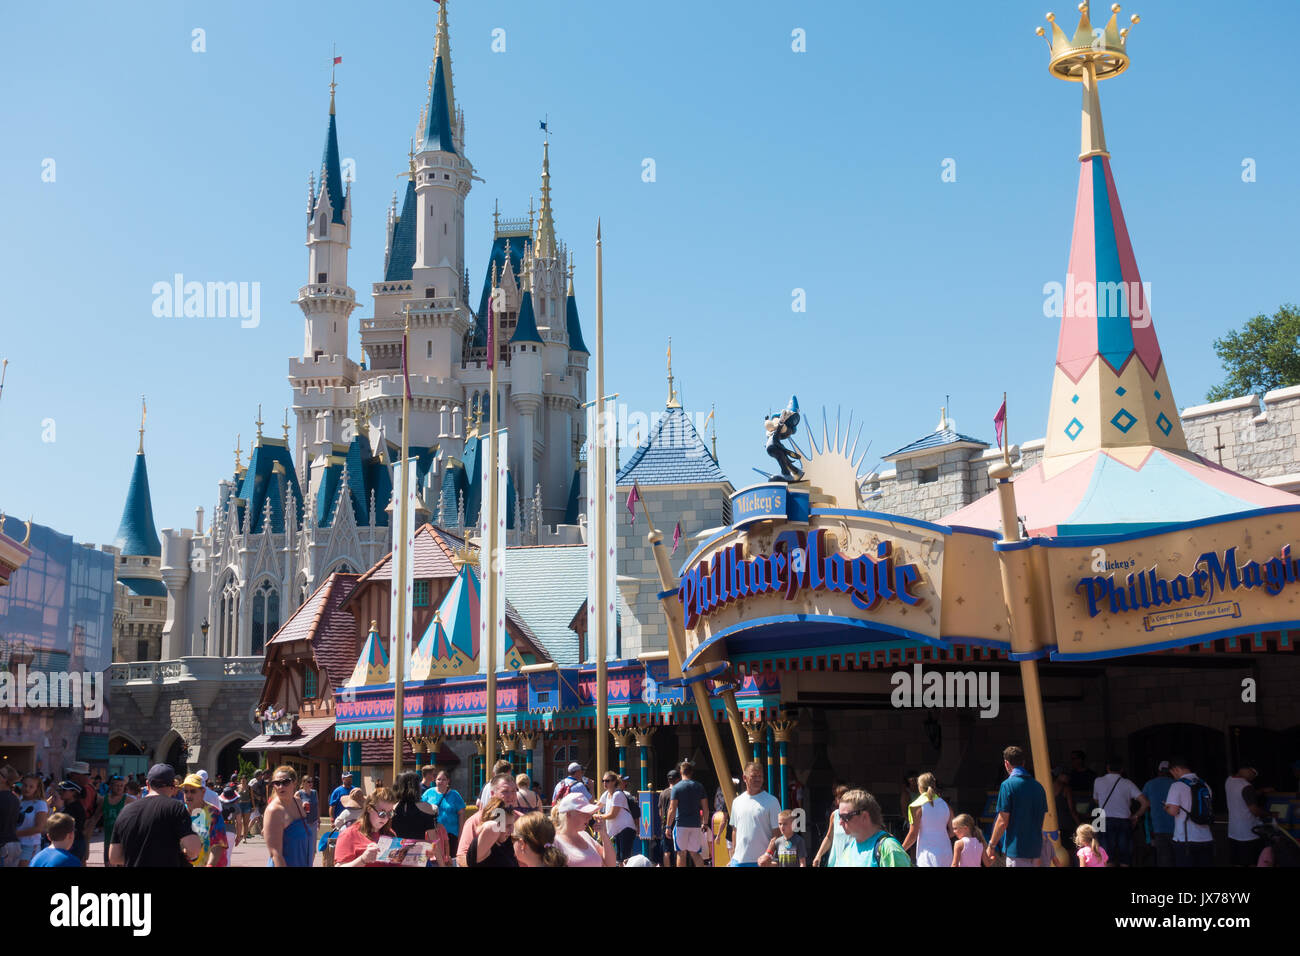 Entrance to Mickeys PhilharMagic show in Fantasyland, Magic Kingdom, Orlando, Florida. Stock Photo